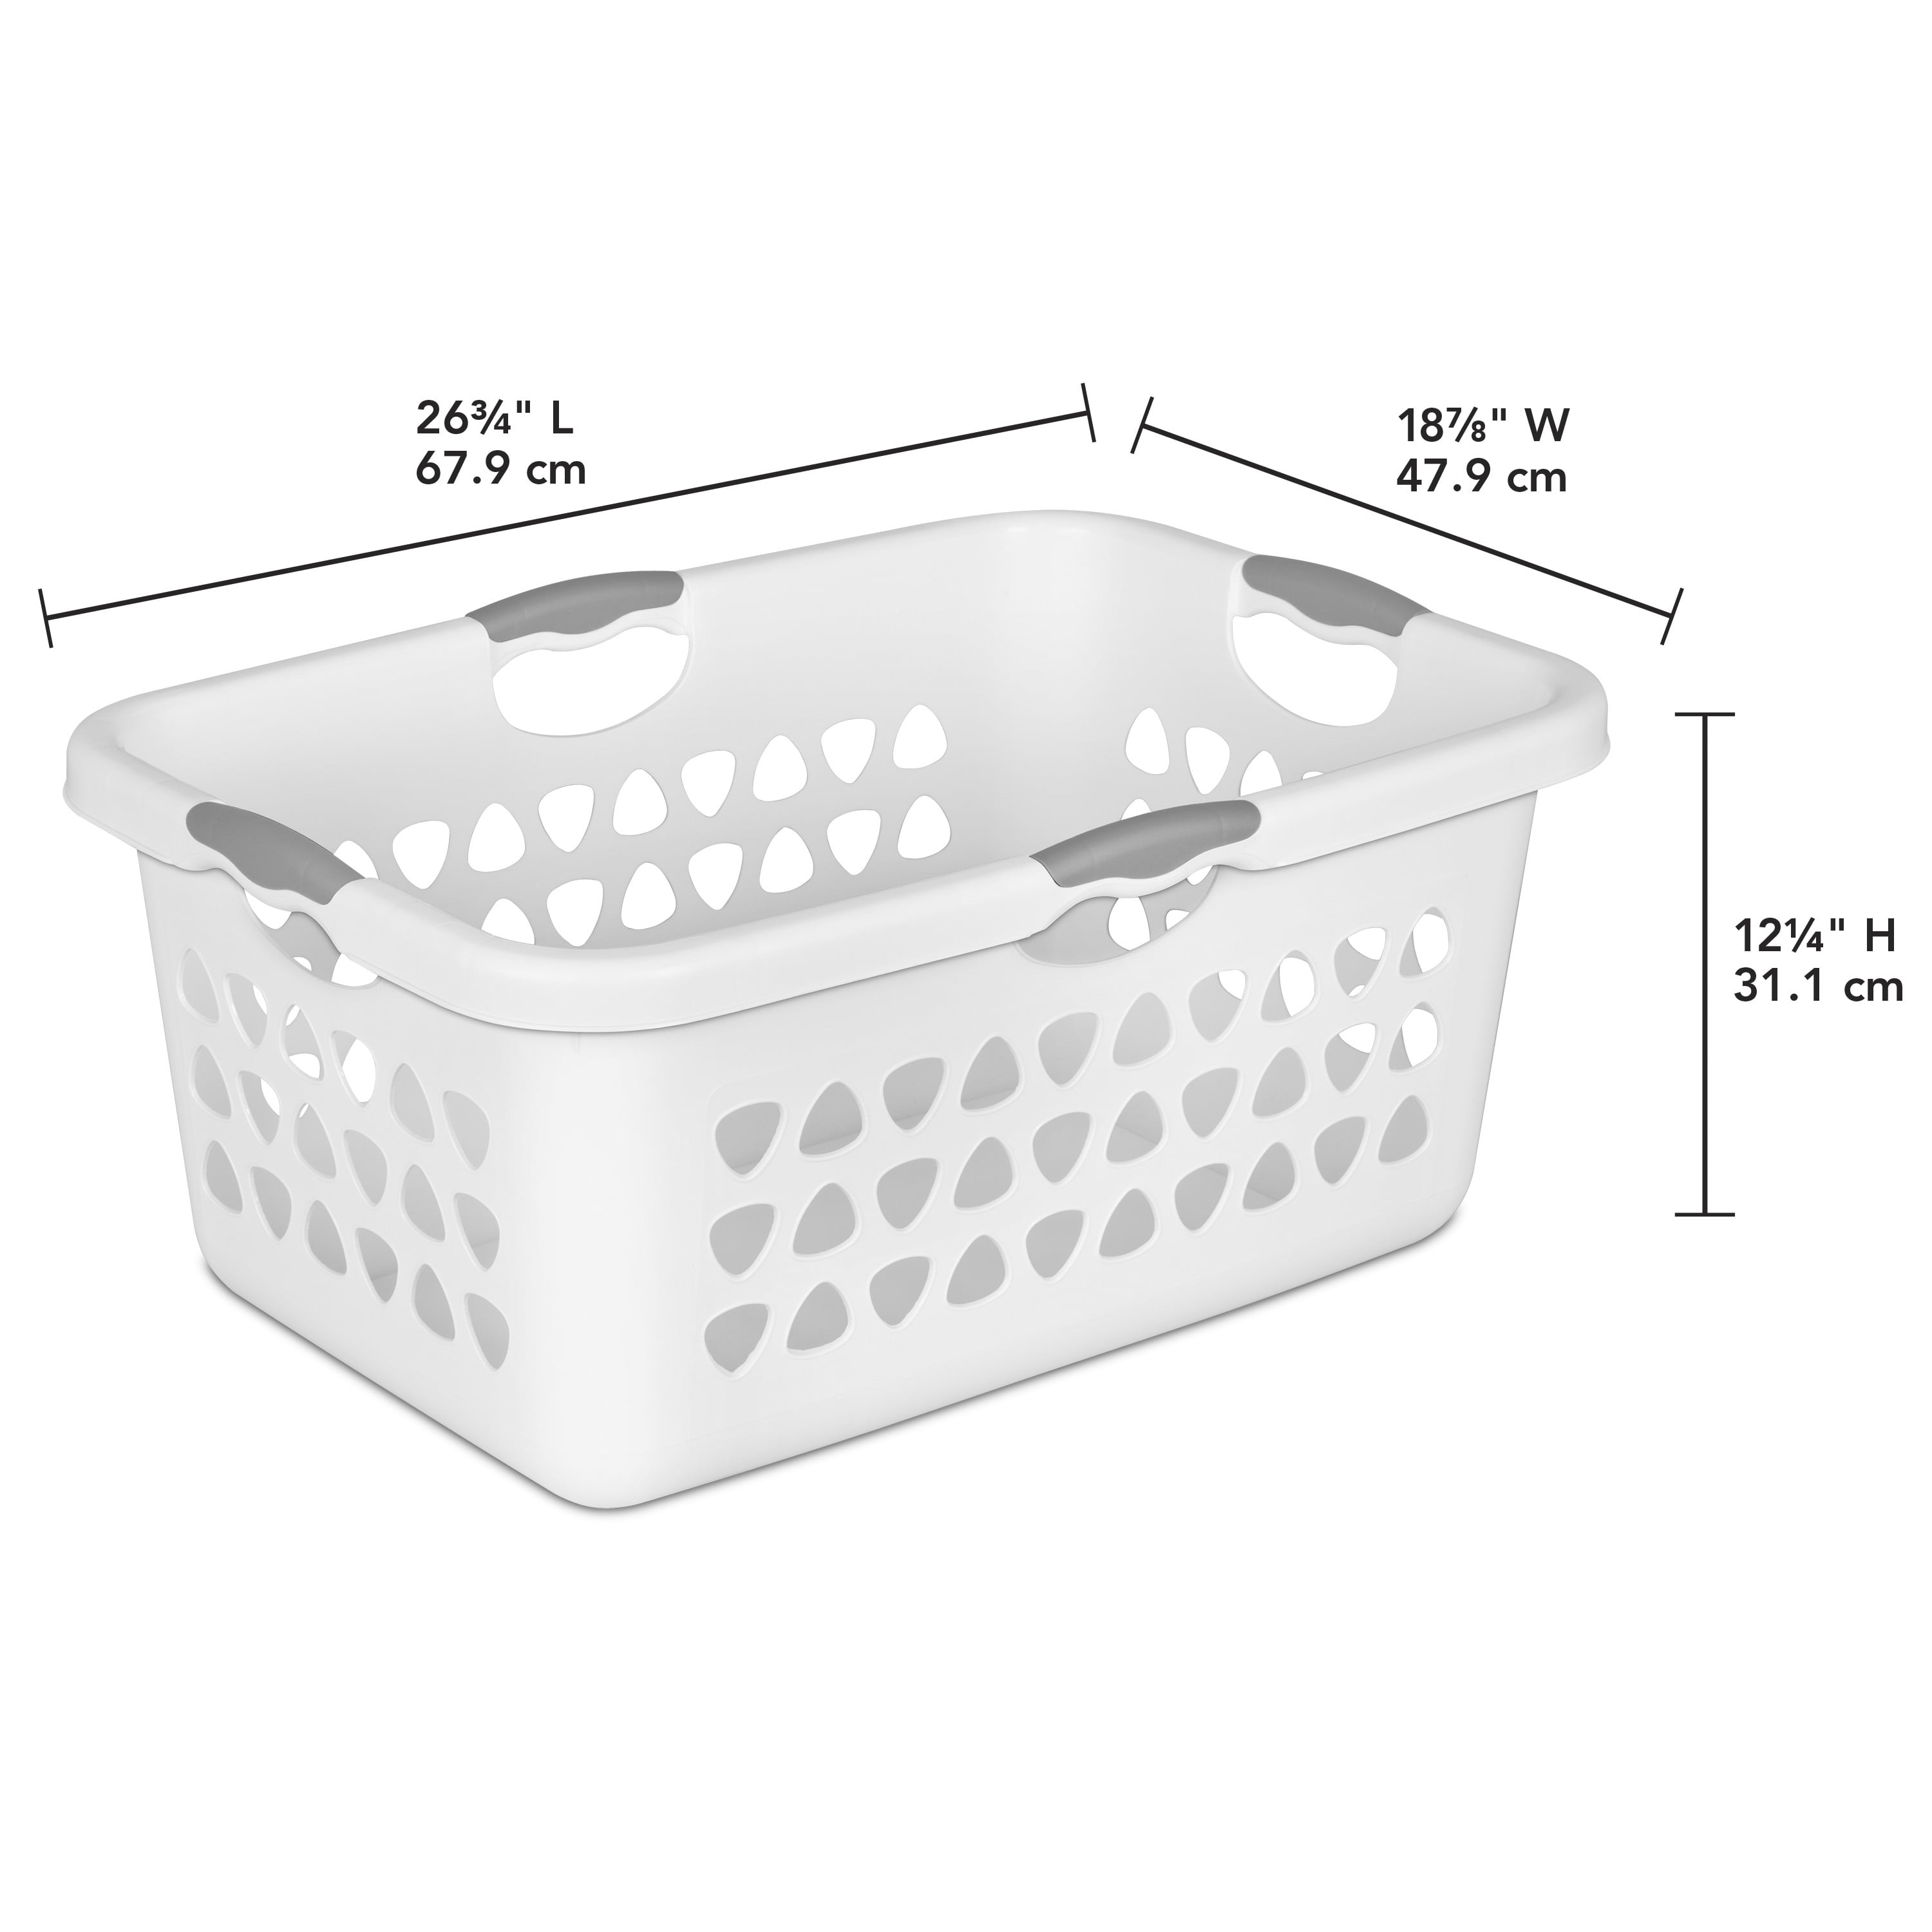 Sterilite 2.7 Bushel Laundry Basket Plastic, Blue Cove, Set of 2